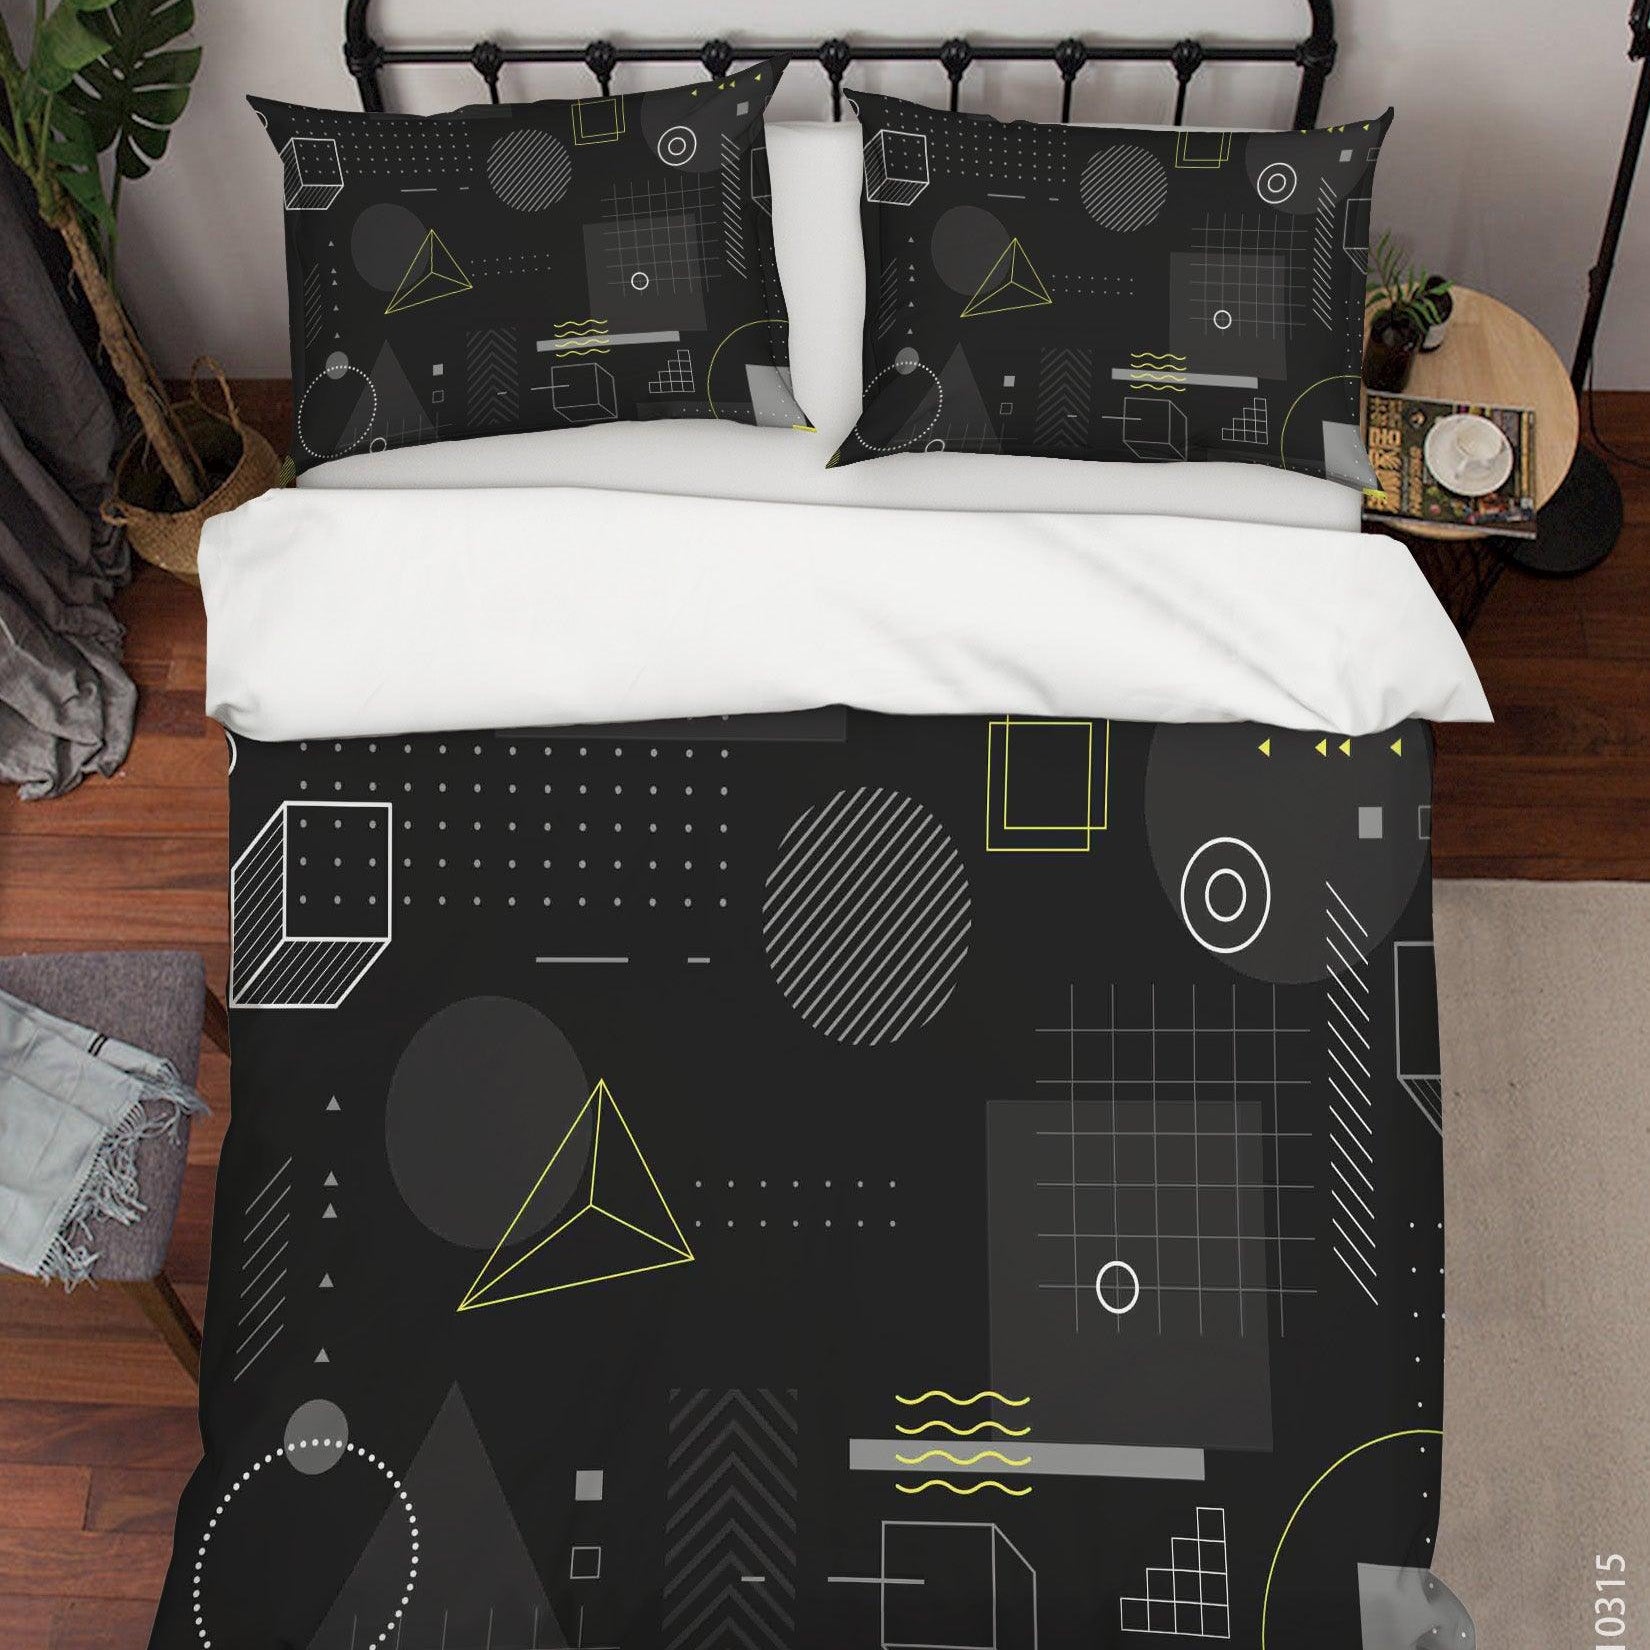 3D Abstract Black Pattern Quilt Cover Set Bedding Set Duvet Cover Pillowcases 79- Jess Art Decoration